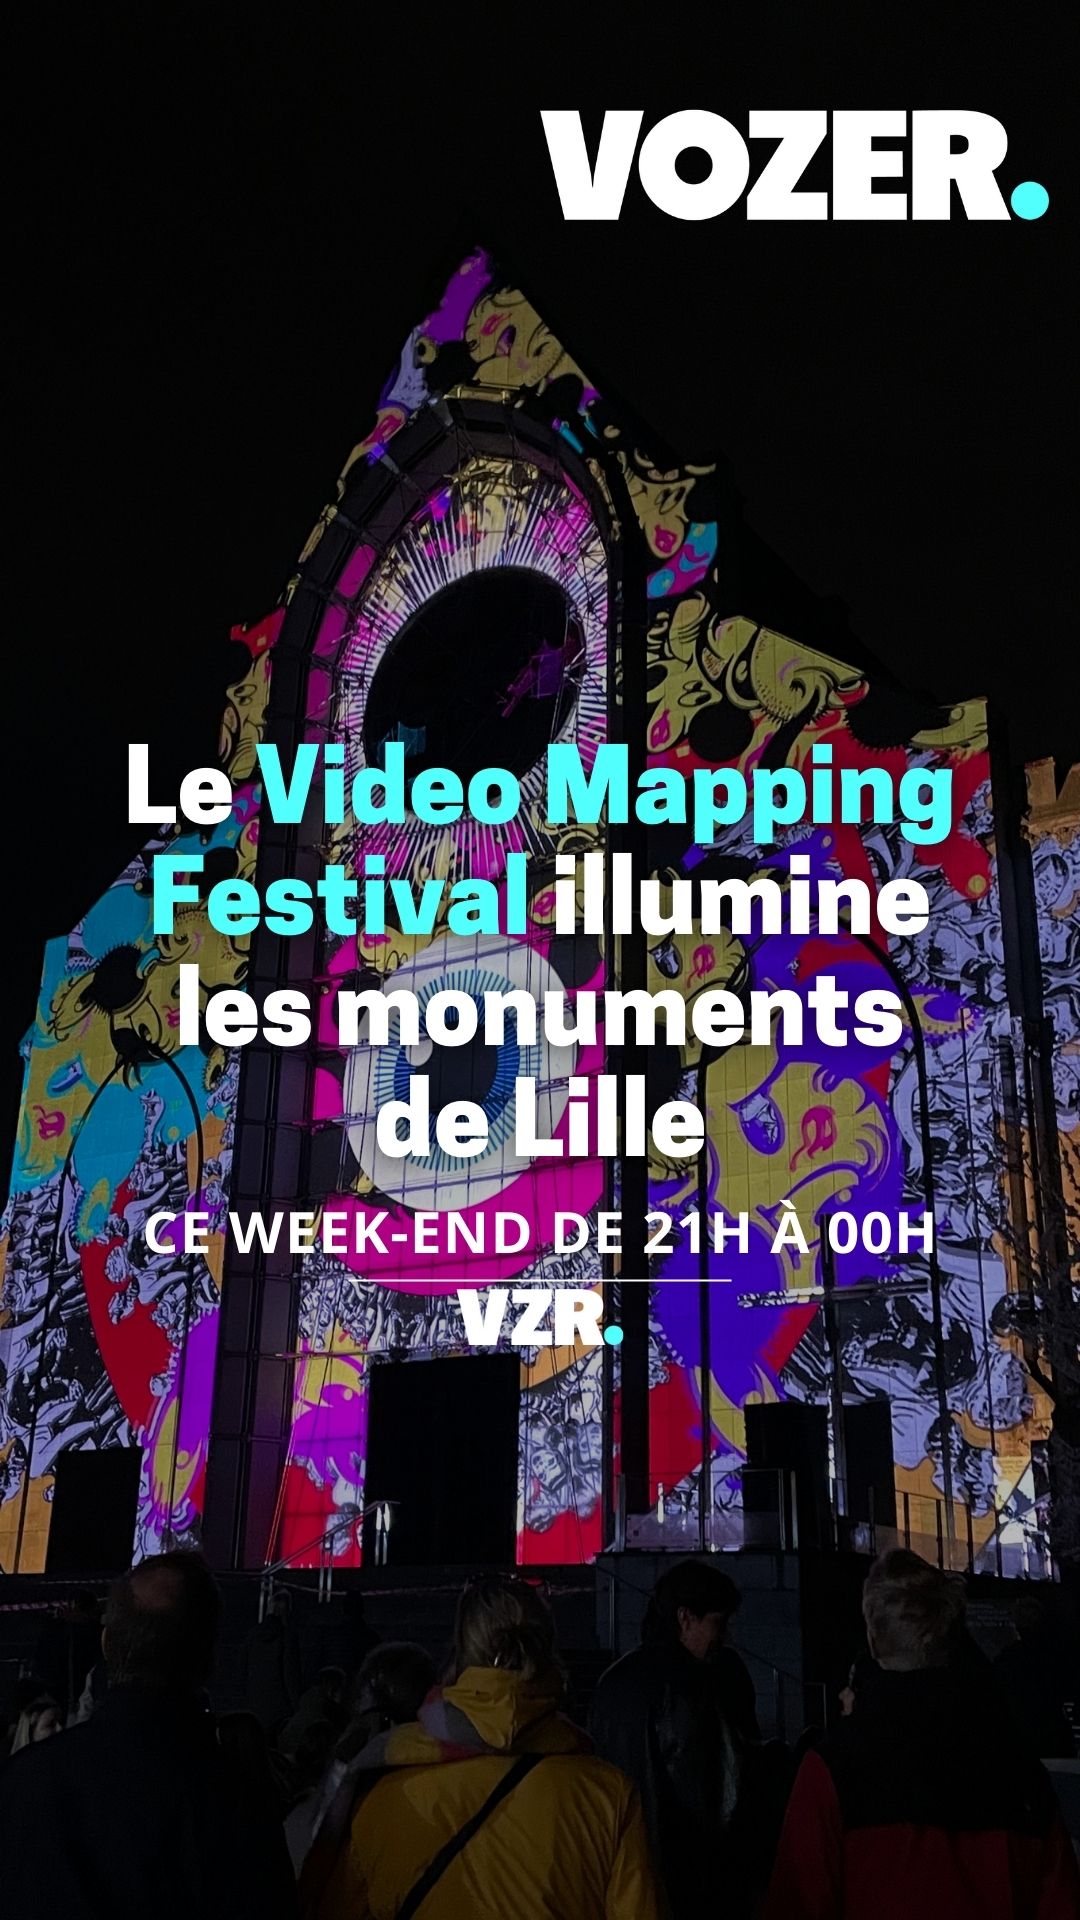 Le Video Mapping Festival illumine les monuments de Lille